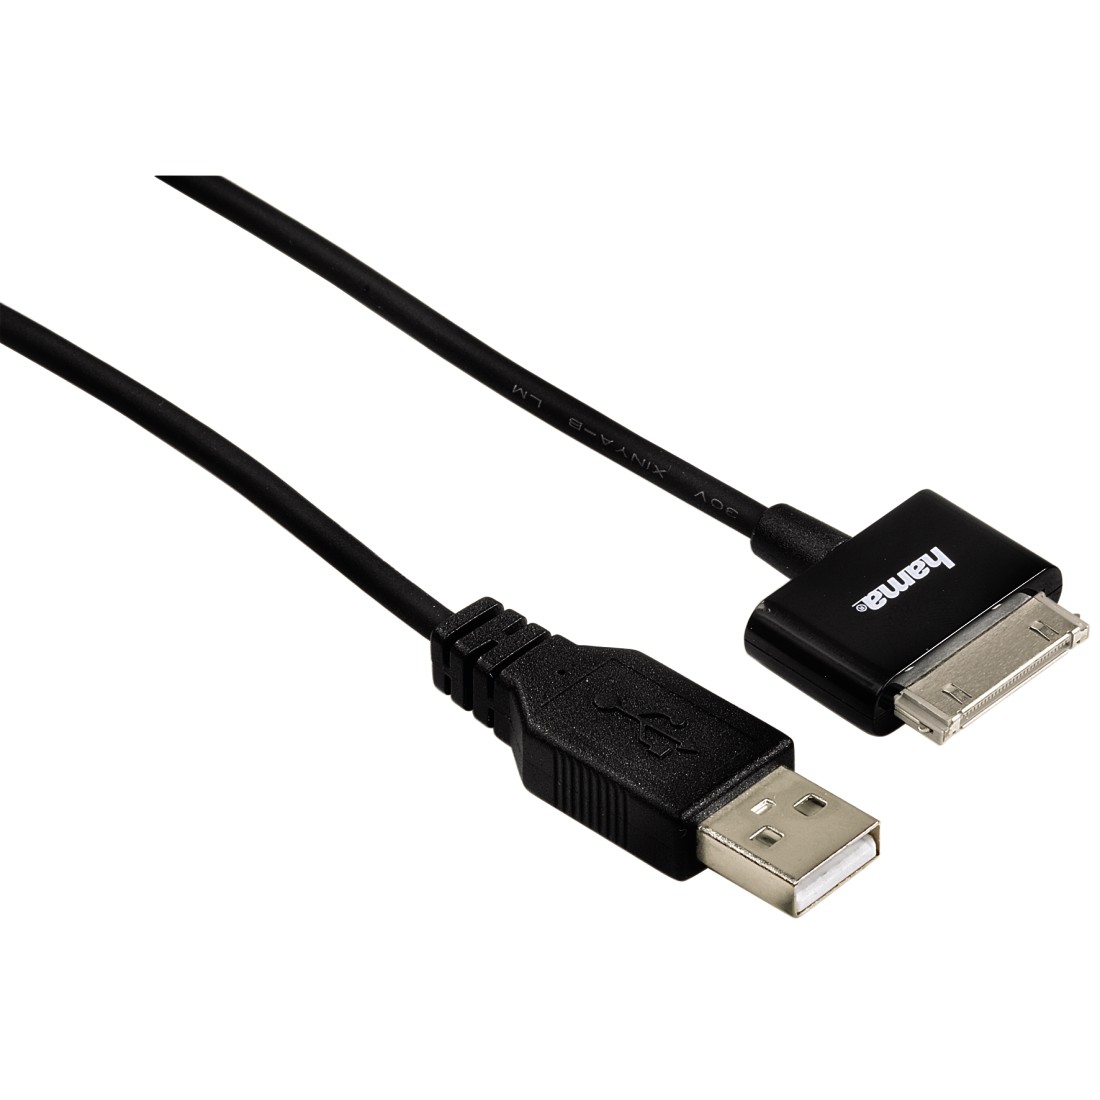  Cablu USB Charging/SYNC Hama 106340 pentru iPad 